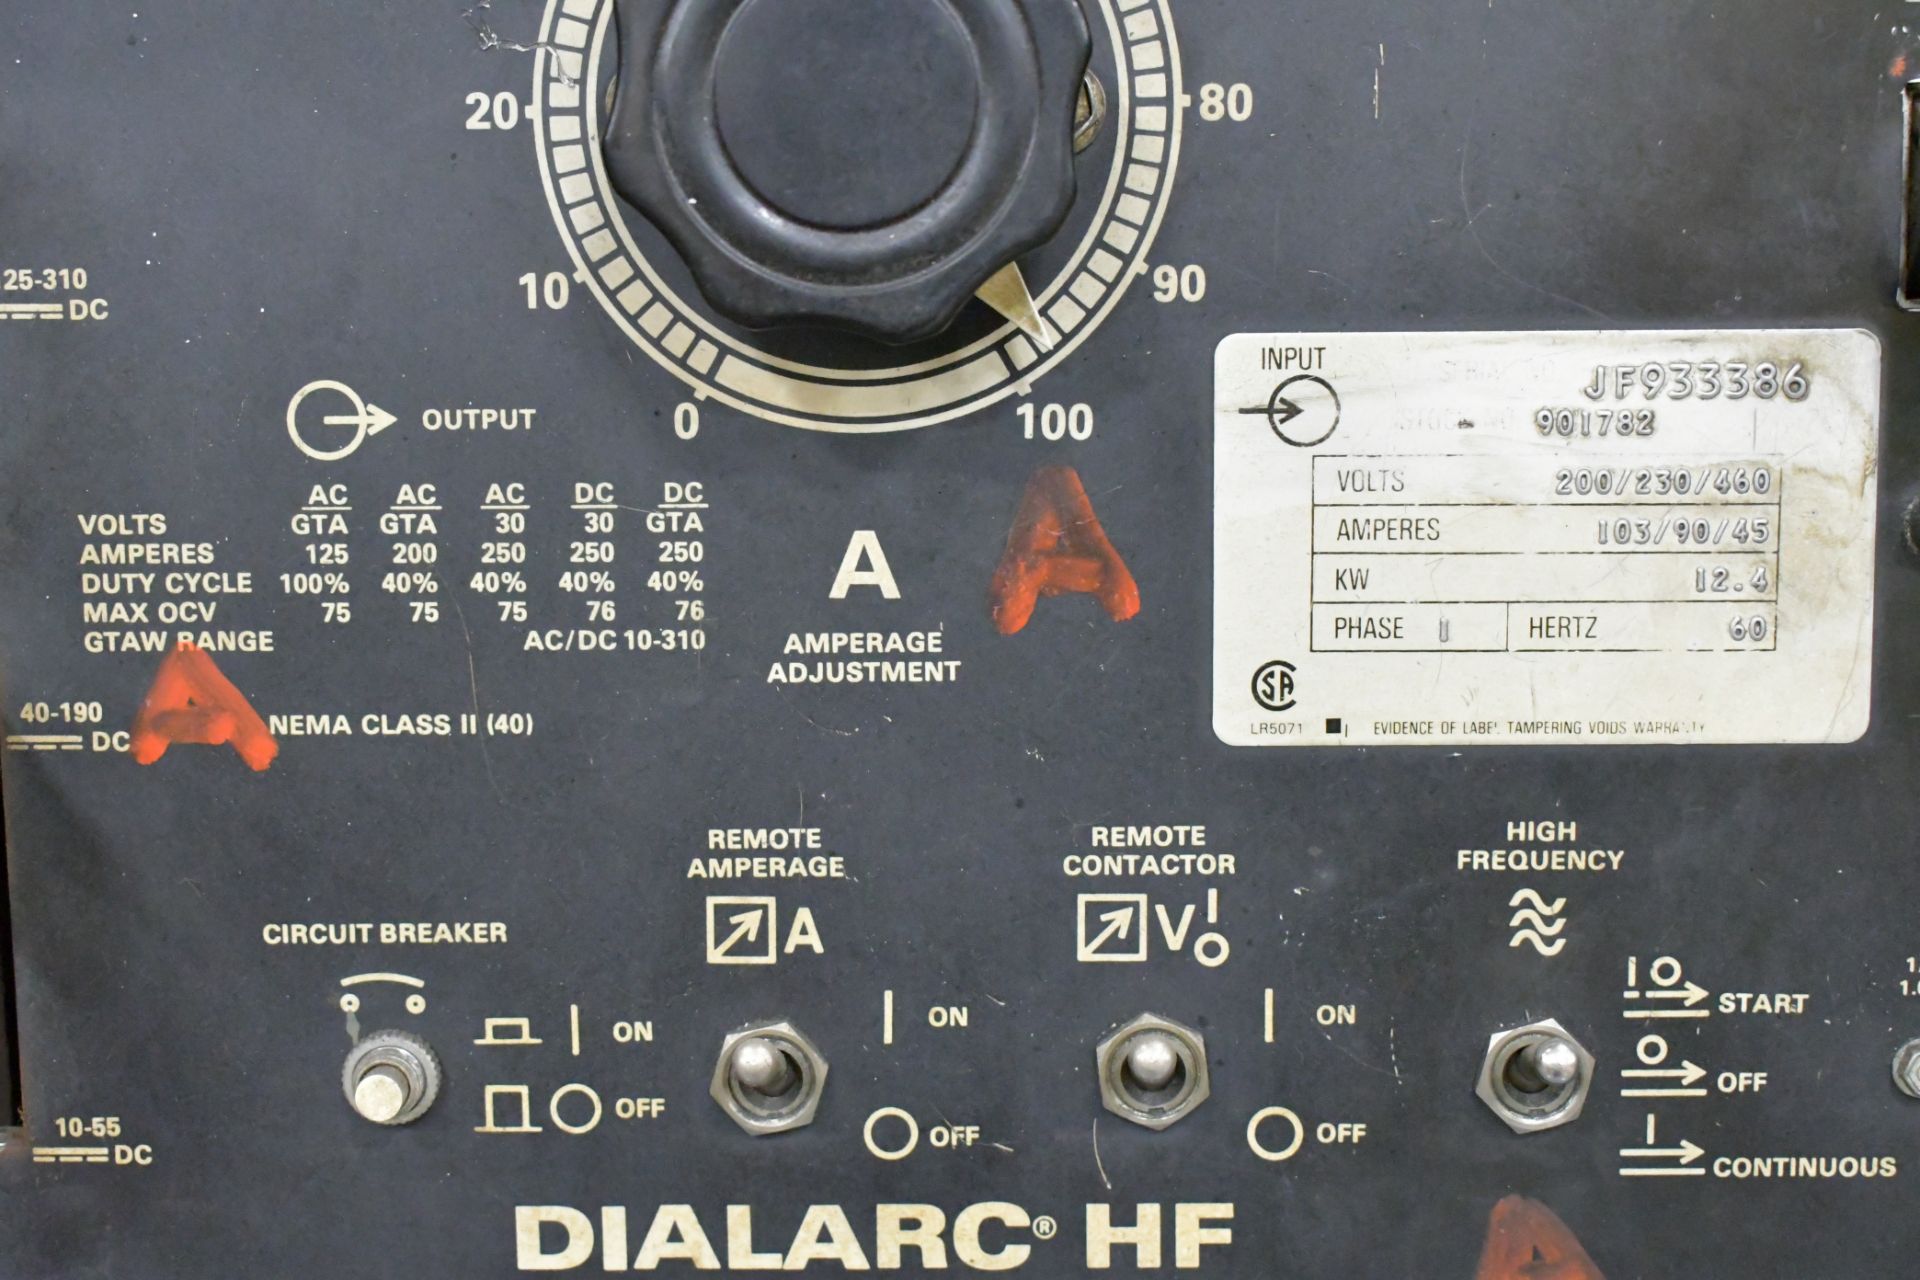 Miller Dialarc HF, 250-Amp Capacity CC AC/DC Tig Welder, S/n JF933386, 1-PH, Foot Pedal Control, - Bild 4 aus 4